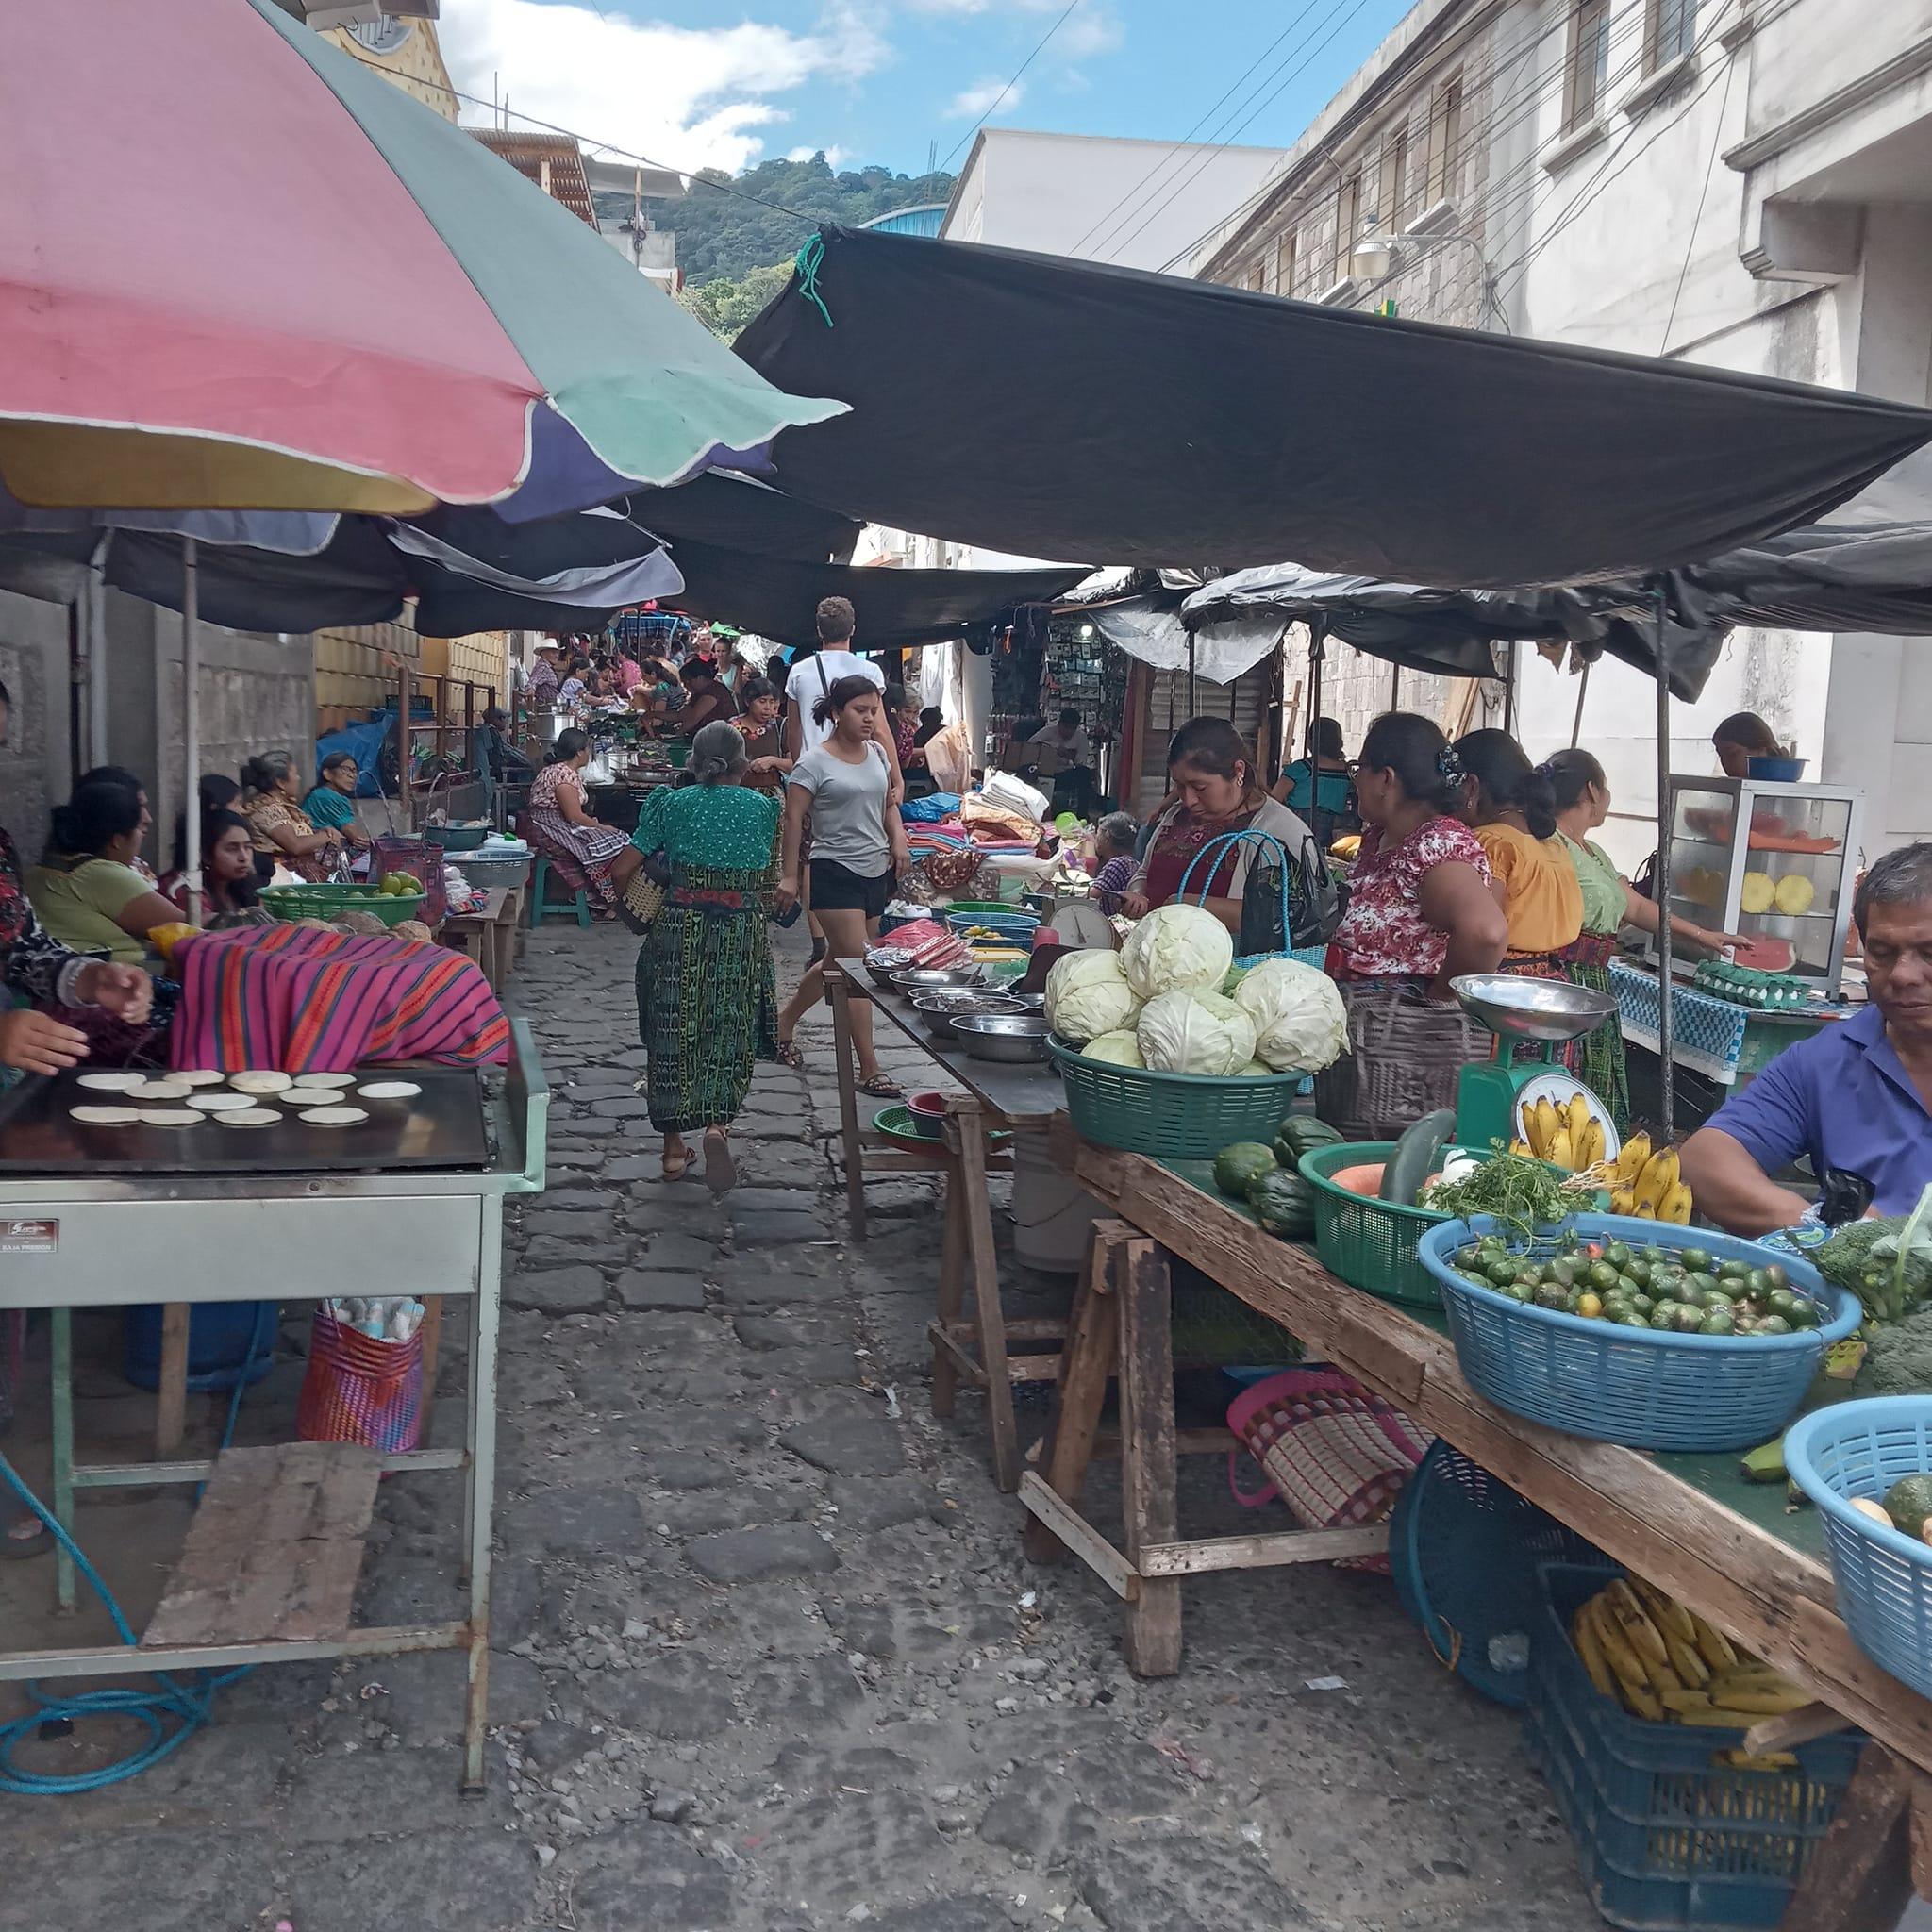 The Market of San Pedro